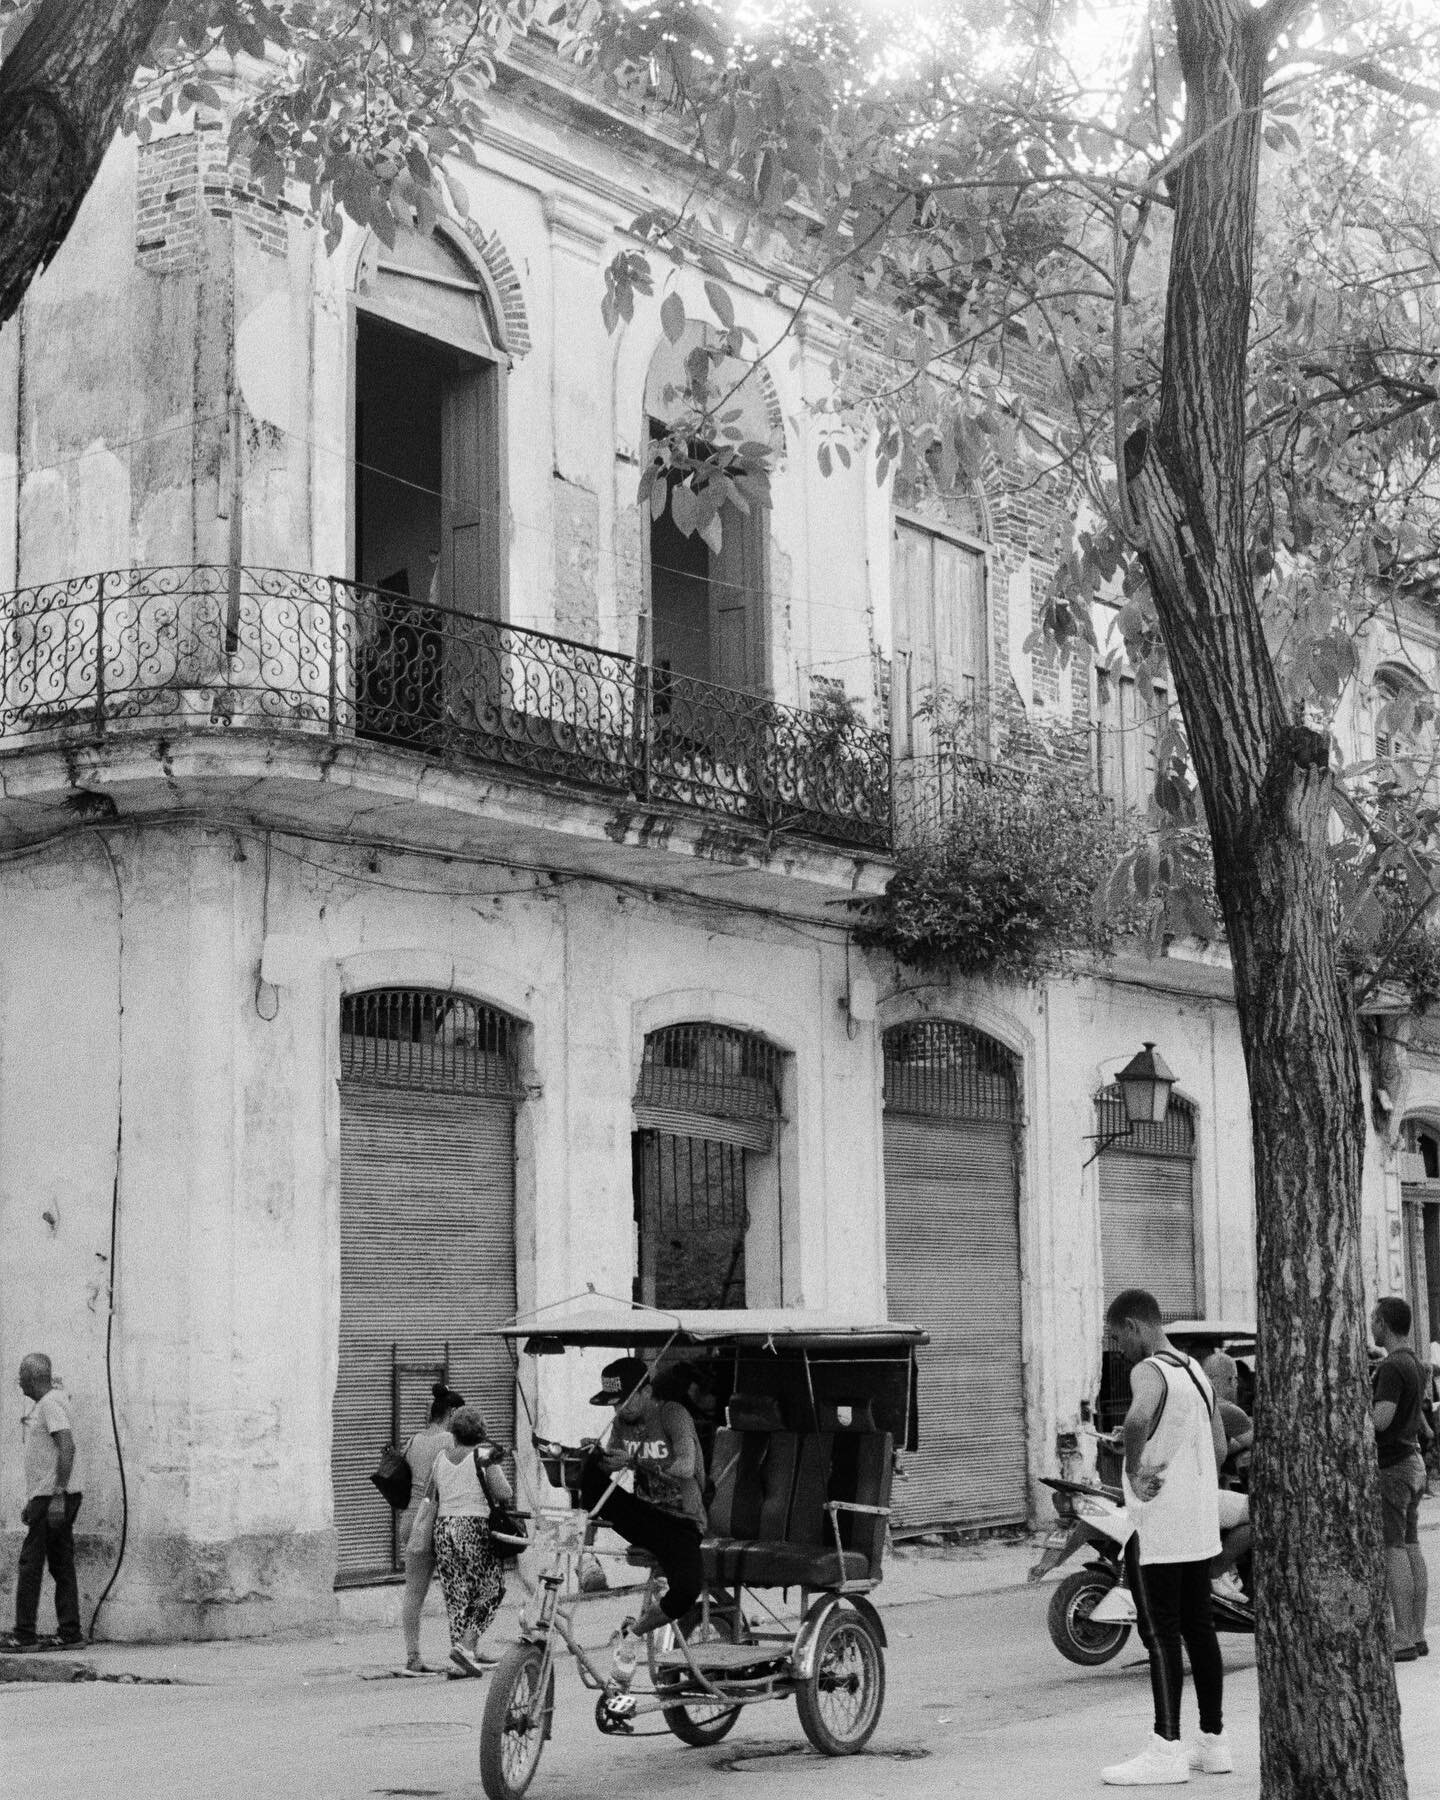 Simple stuff 
Cuba, 2019 
&bull;
&bull;
&bull;
&bull;
&bull;
#bink #adventure #cuba #film #havana #filmphotography #filmisnotdead #35mm #analog #movie #ishootfilm #habana  #cuban #filmcamera #lahabana #believeinfilm #filmcommunity #habanos #analogue 